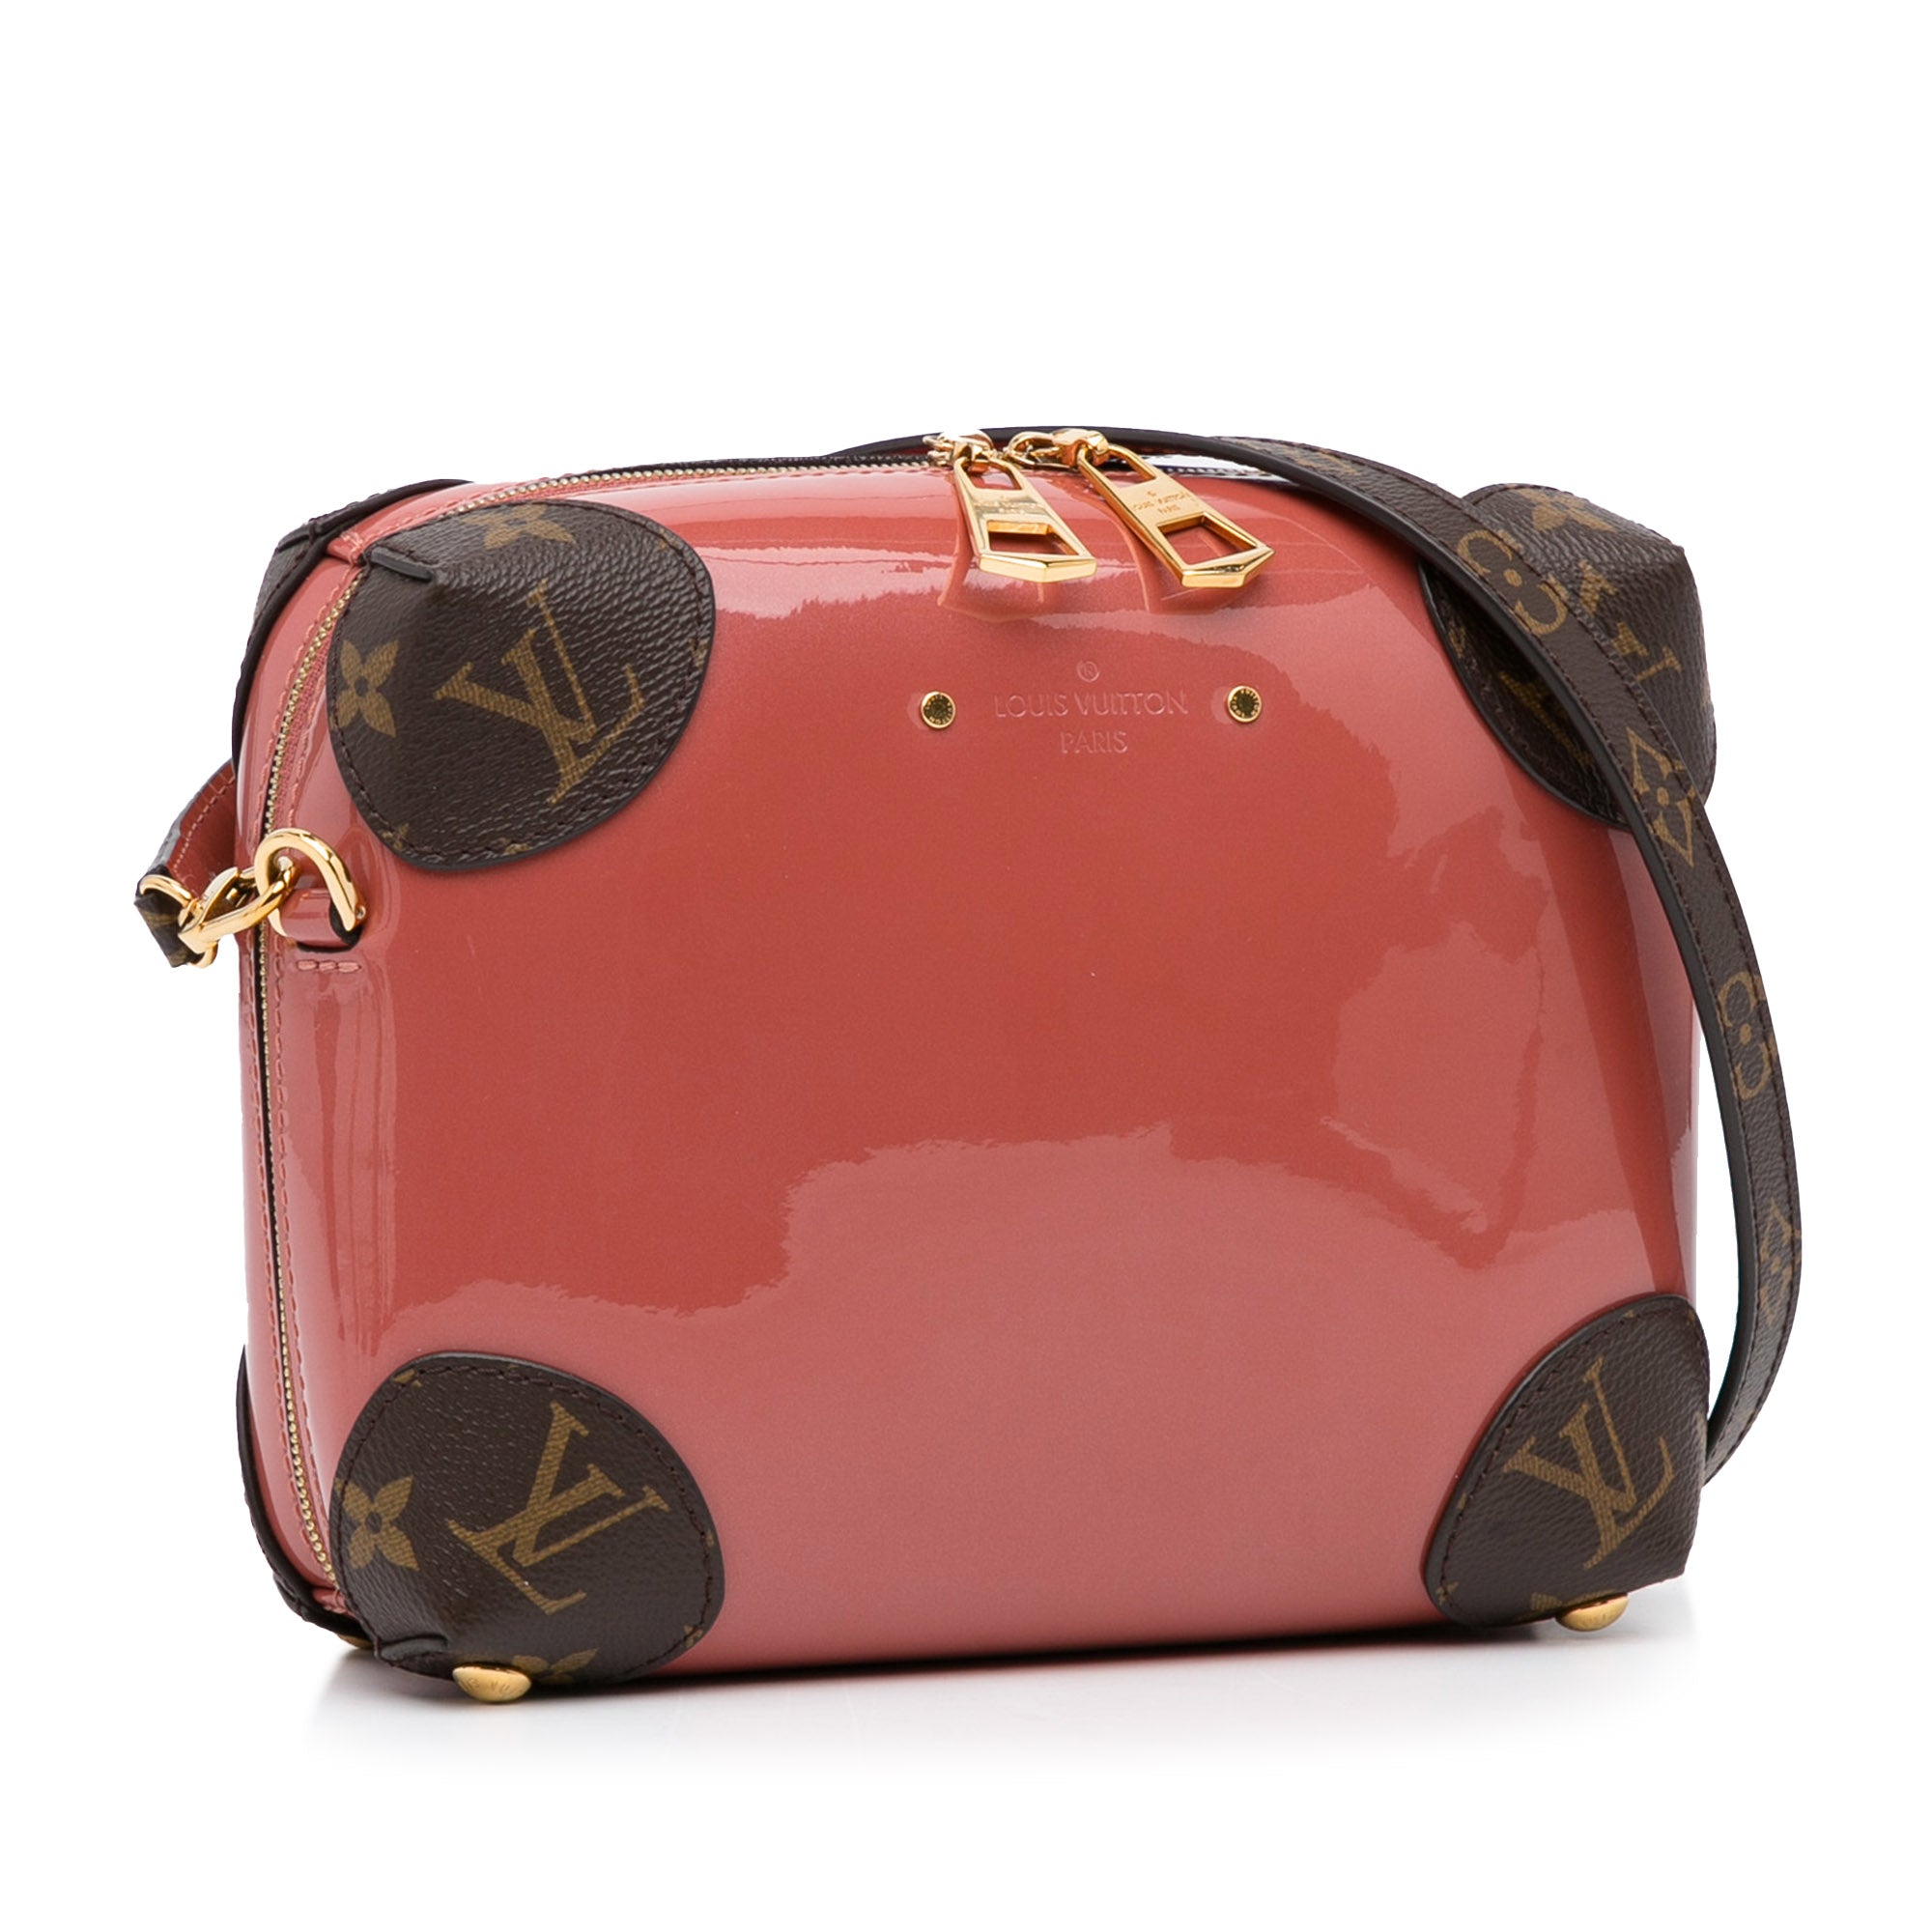 pink and orange louis vuittons handbags